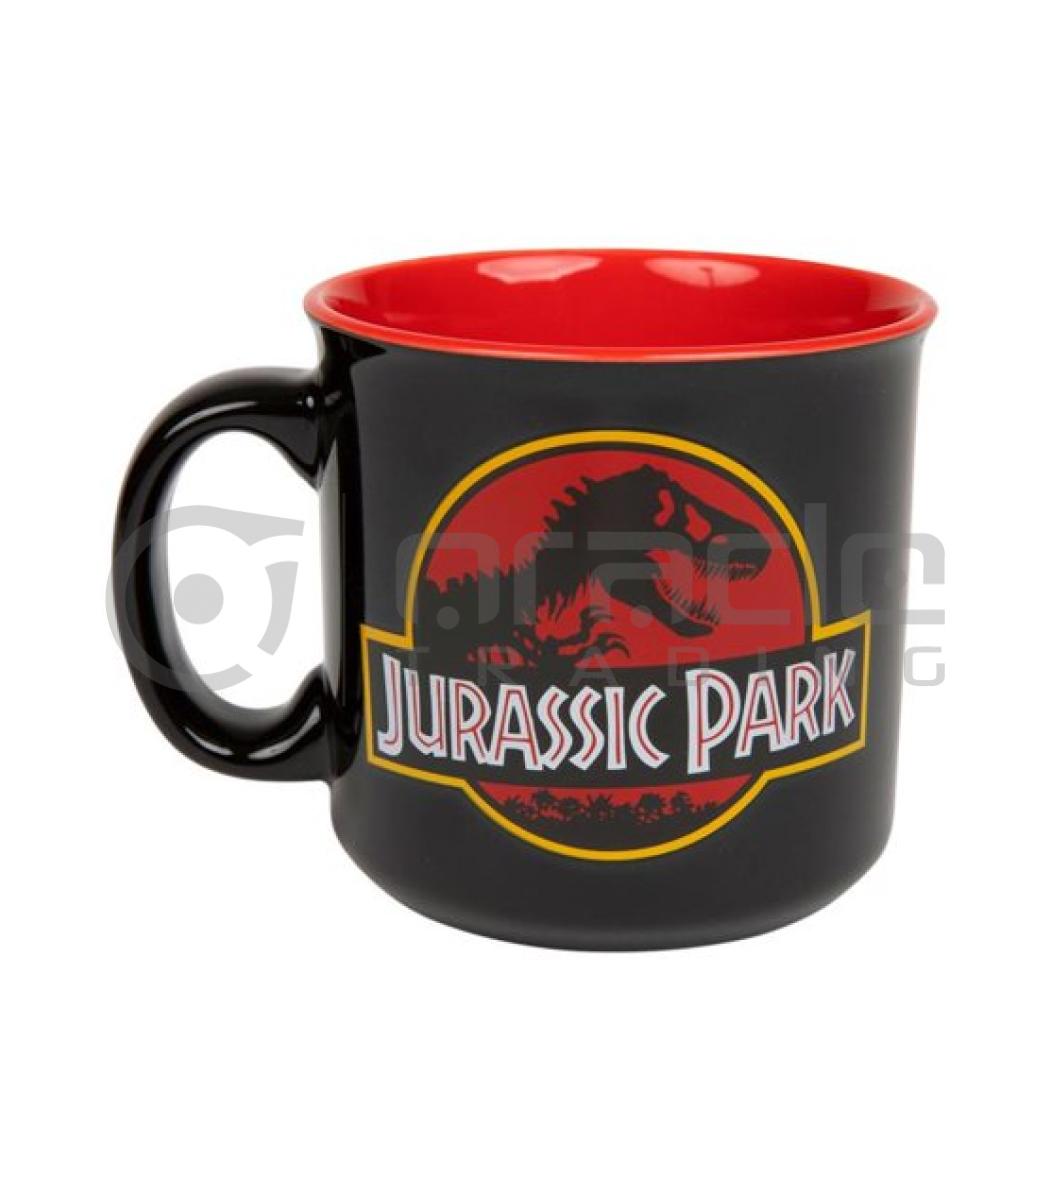 Jurassic Park Jumbo Camper Mug - Classic